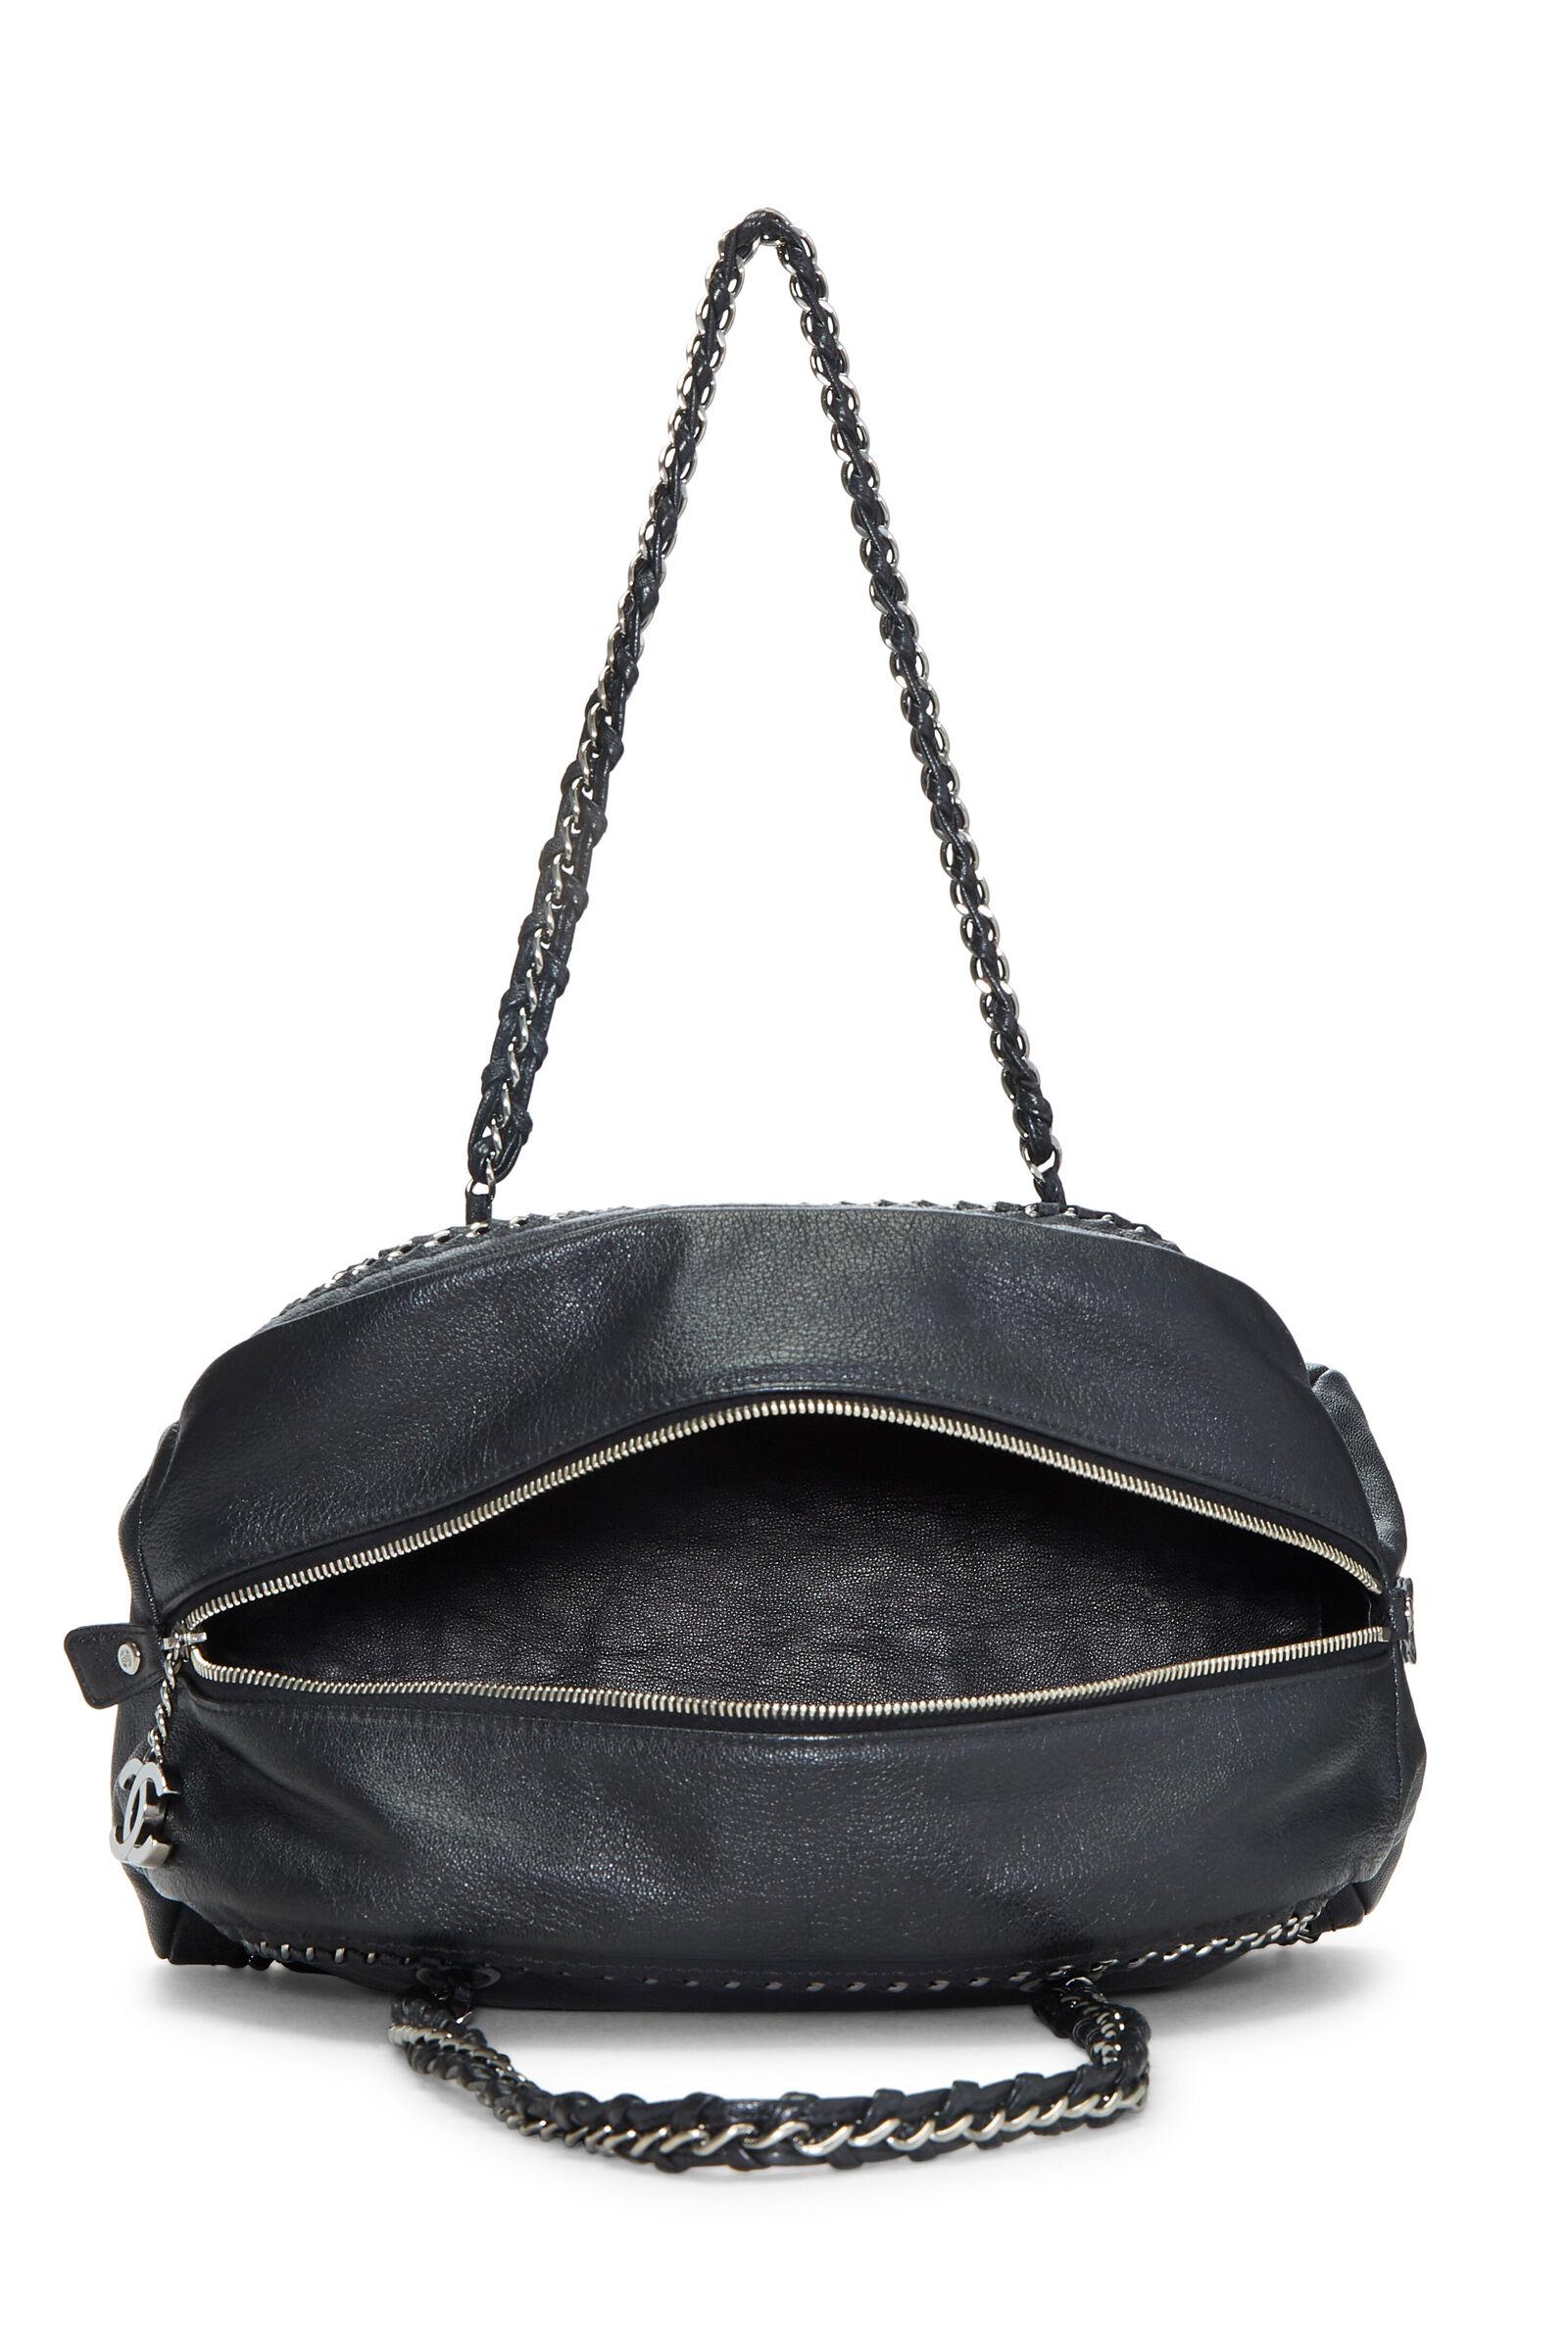 Chanel Black Bowling Bag Luxury Ligne Leather Lambskin Medium Satchel For Sale 1